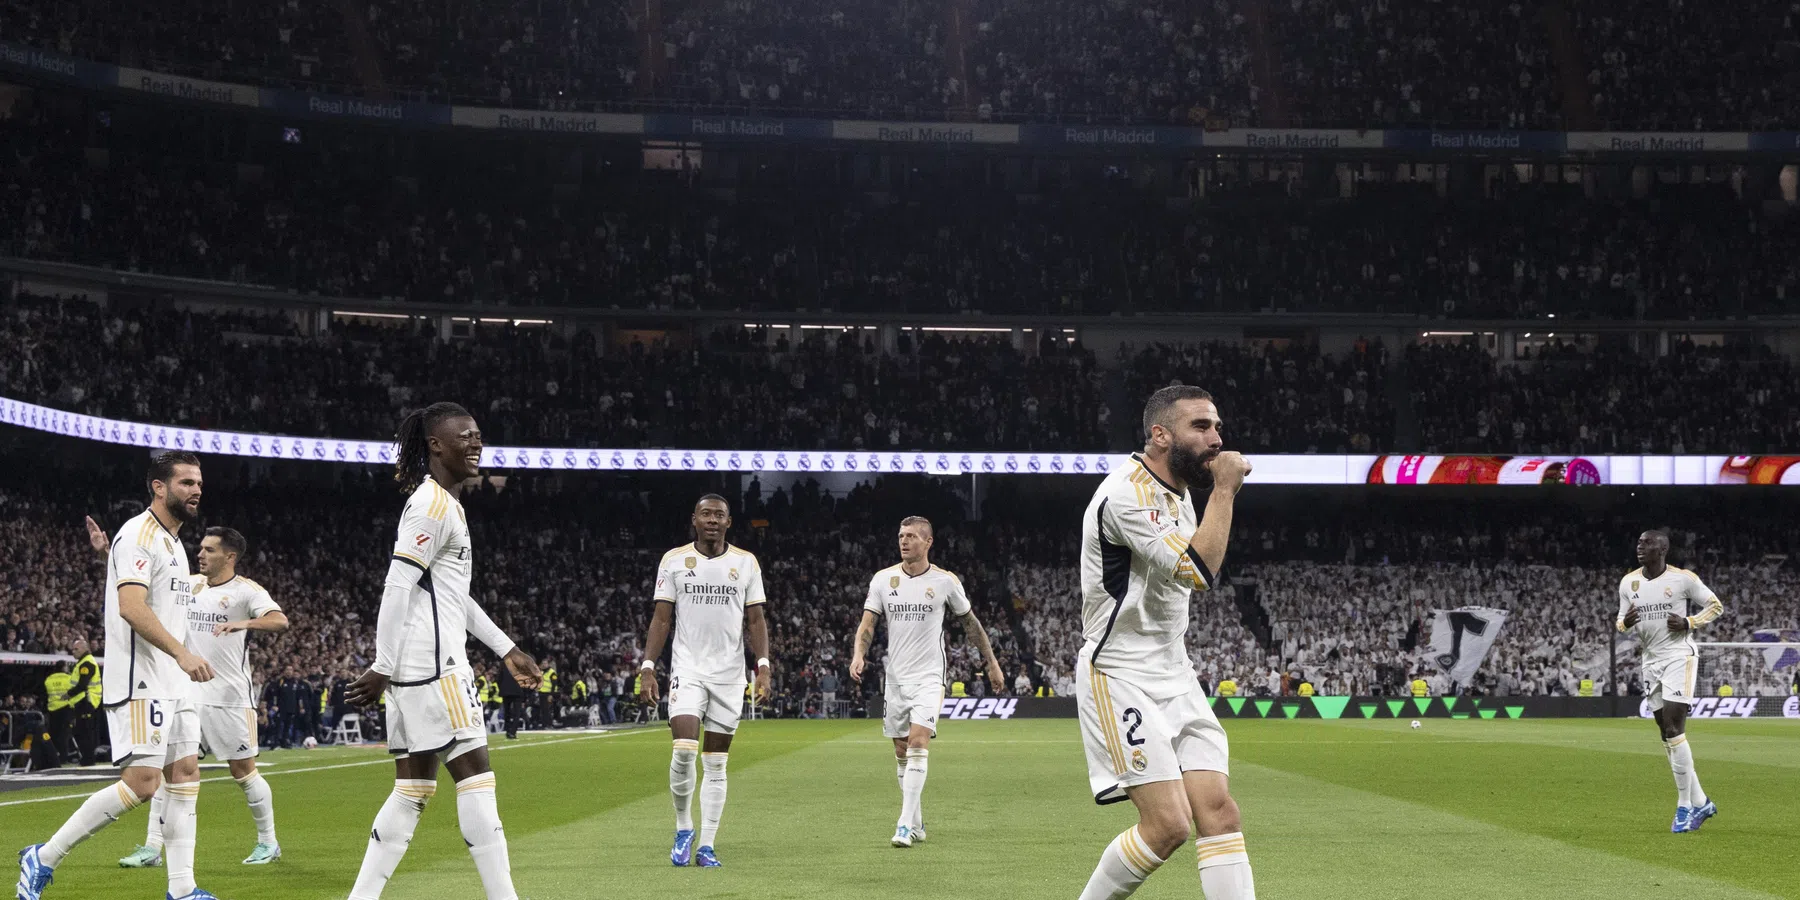 'Real Madrid gaat vol voor nieuwe Galáctico'